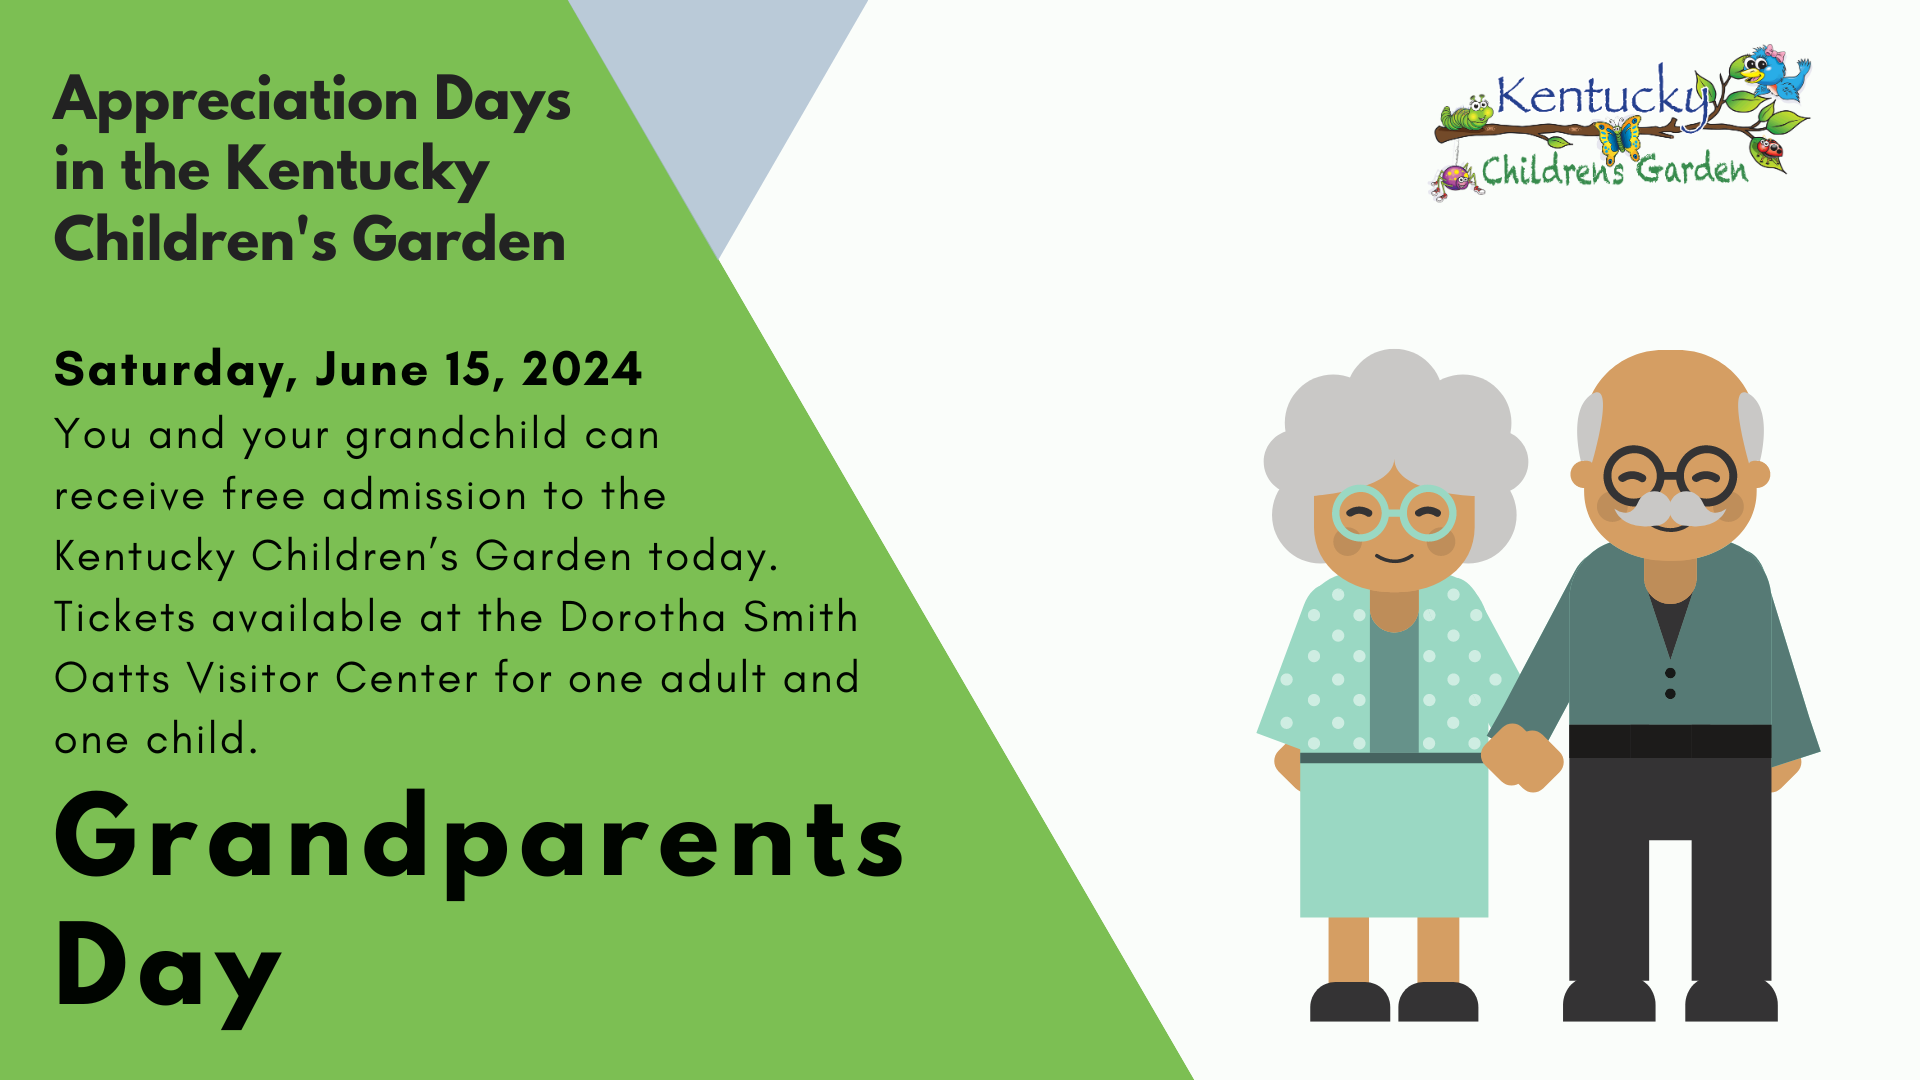 Graphic for grandparent appreciation day in the Kentucky Children's Garden